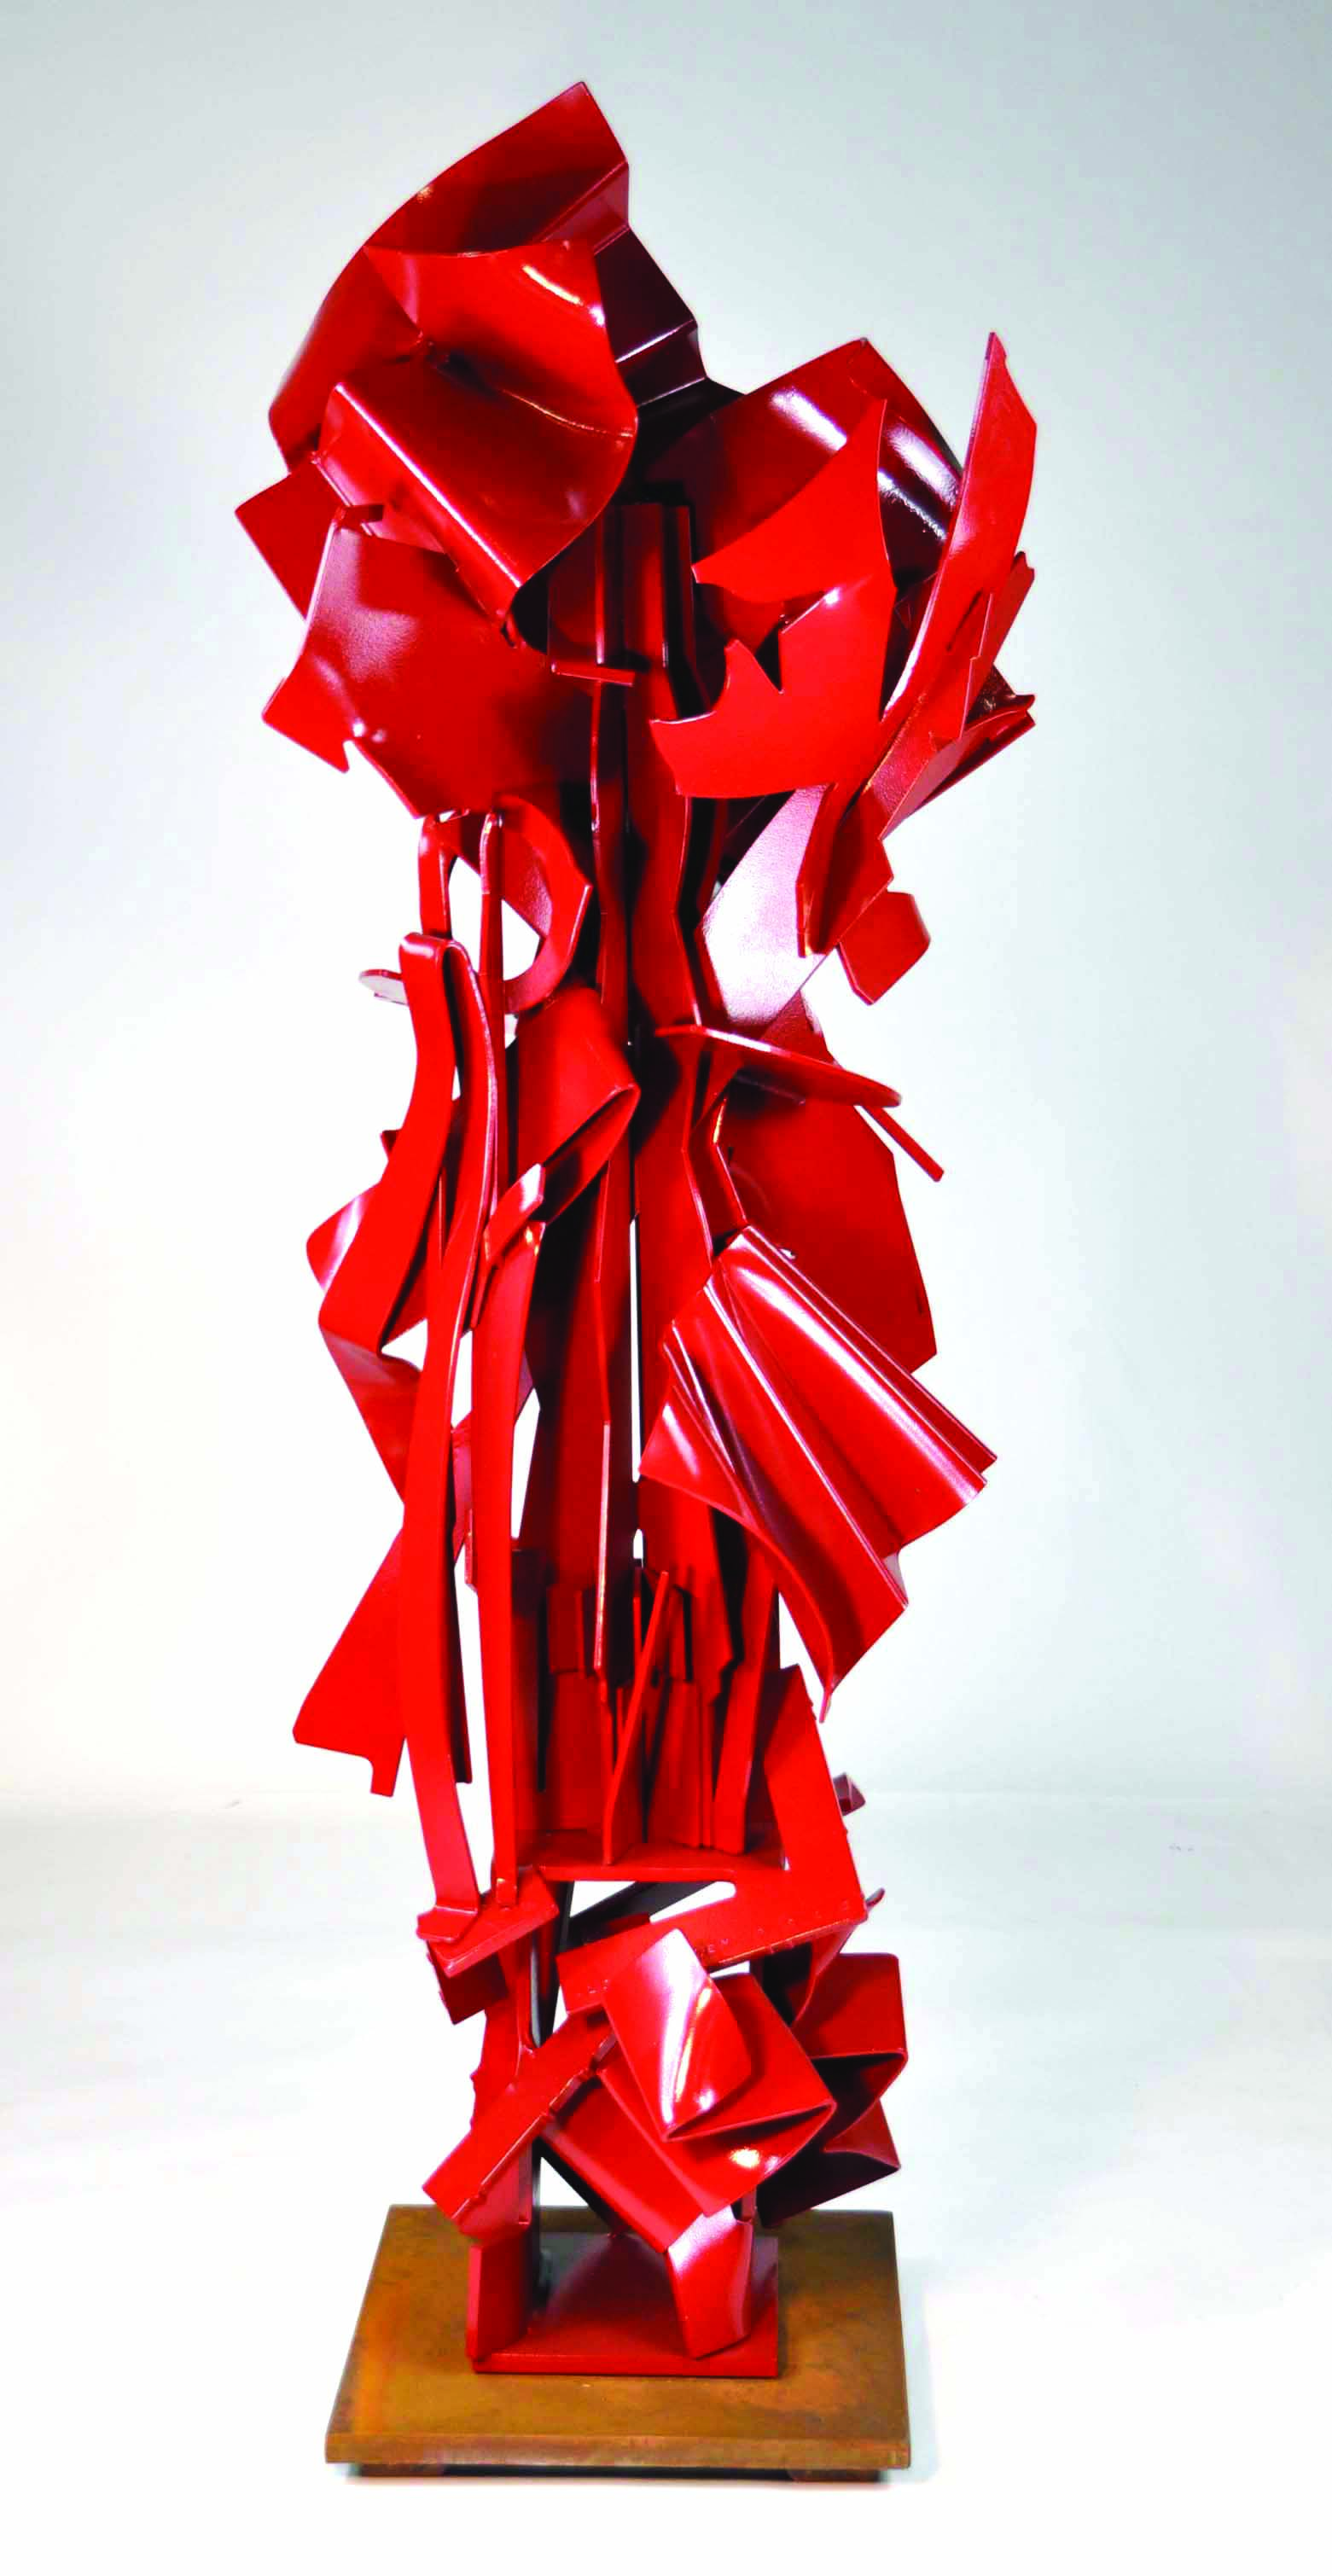 Albert Paley - Harlequin, 2013, weathering steel, monochromed, 80” x 27.5” x 25.5”